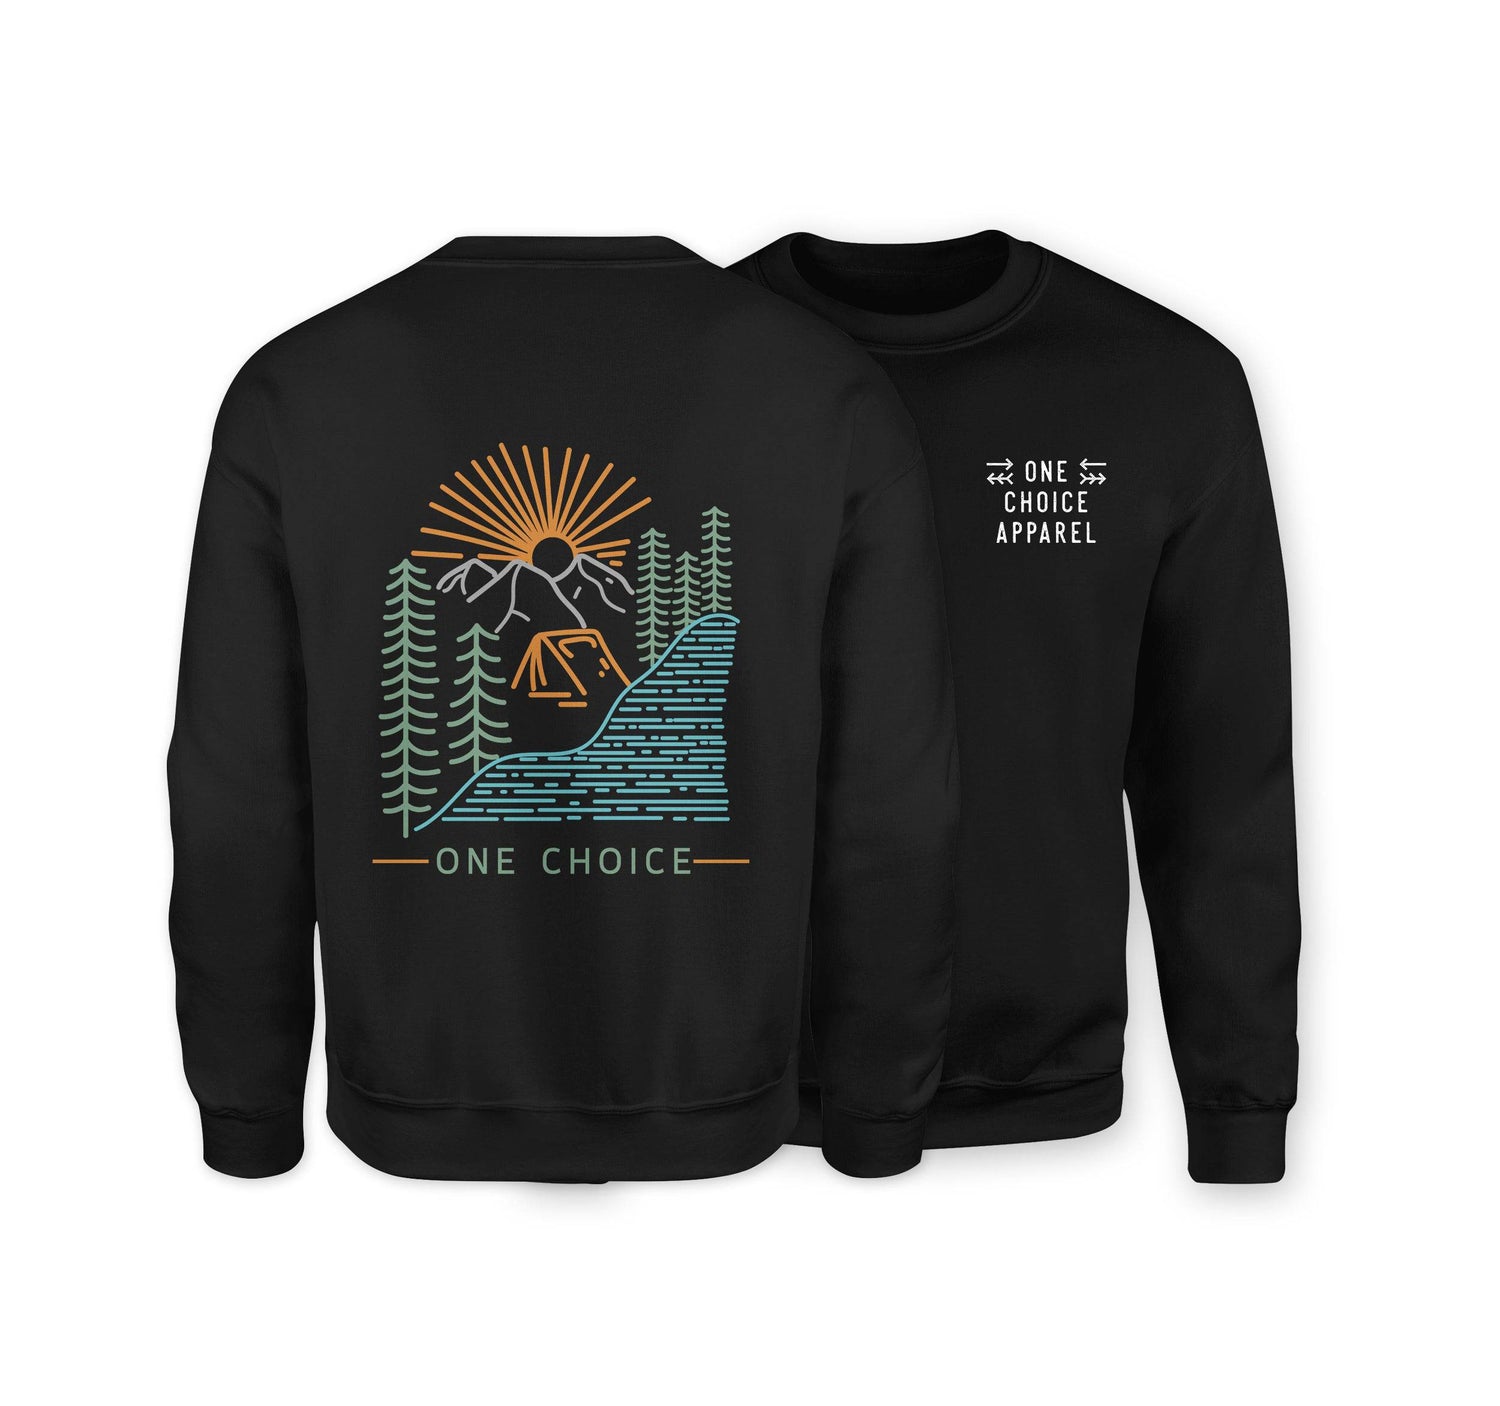 Camping Scene Sweatshirt - Organic Cotton Sweatshirt - One Choice Apparel